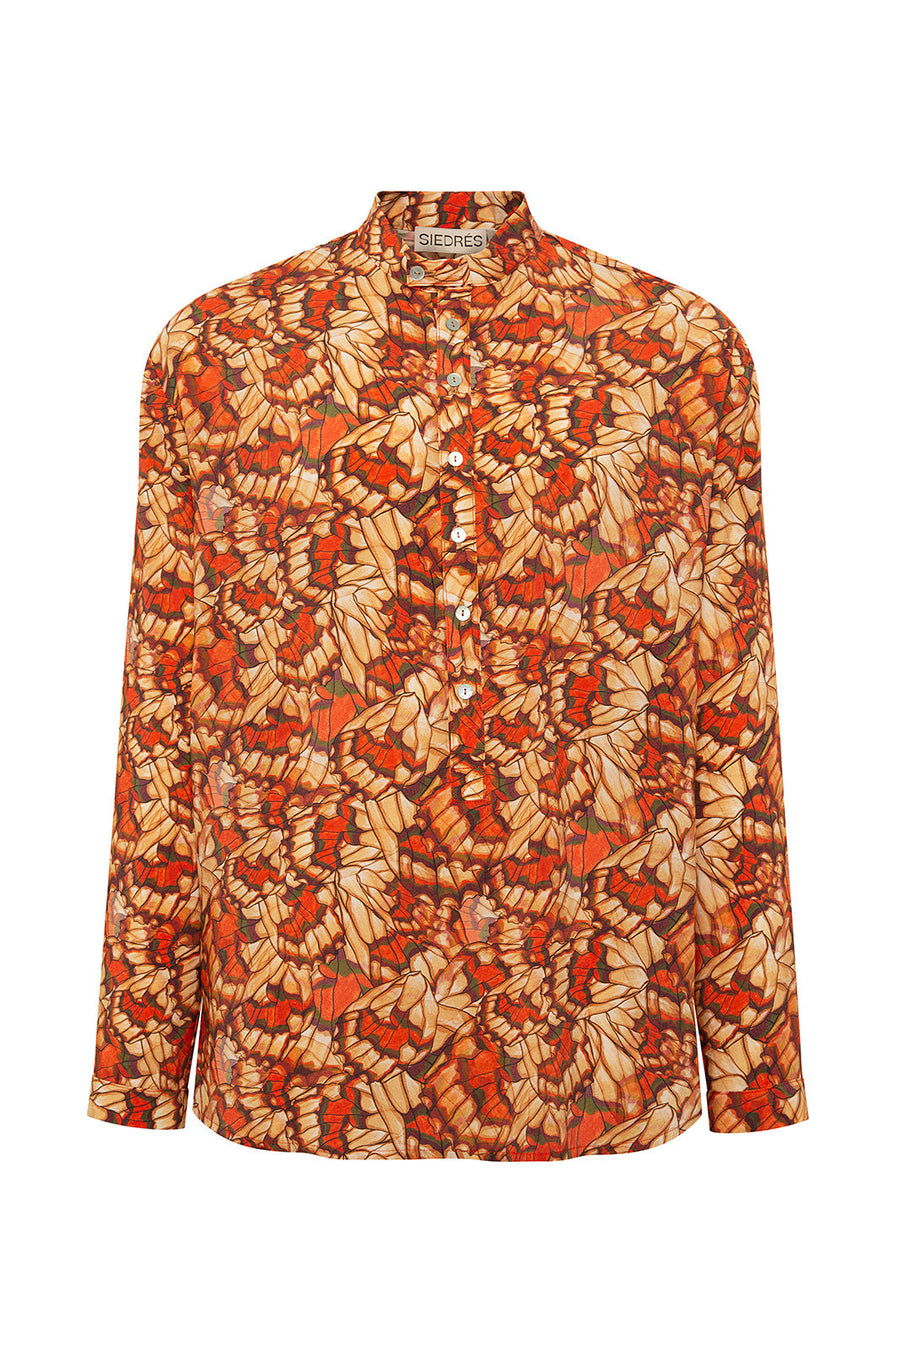 MAUI - Mandarin collar long sleeve shirt with 3/4 placket